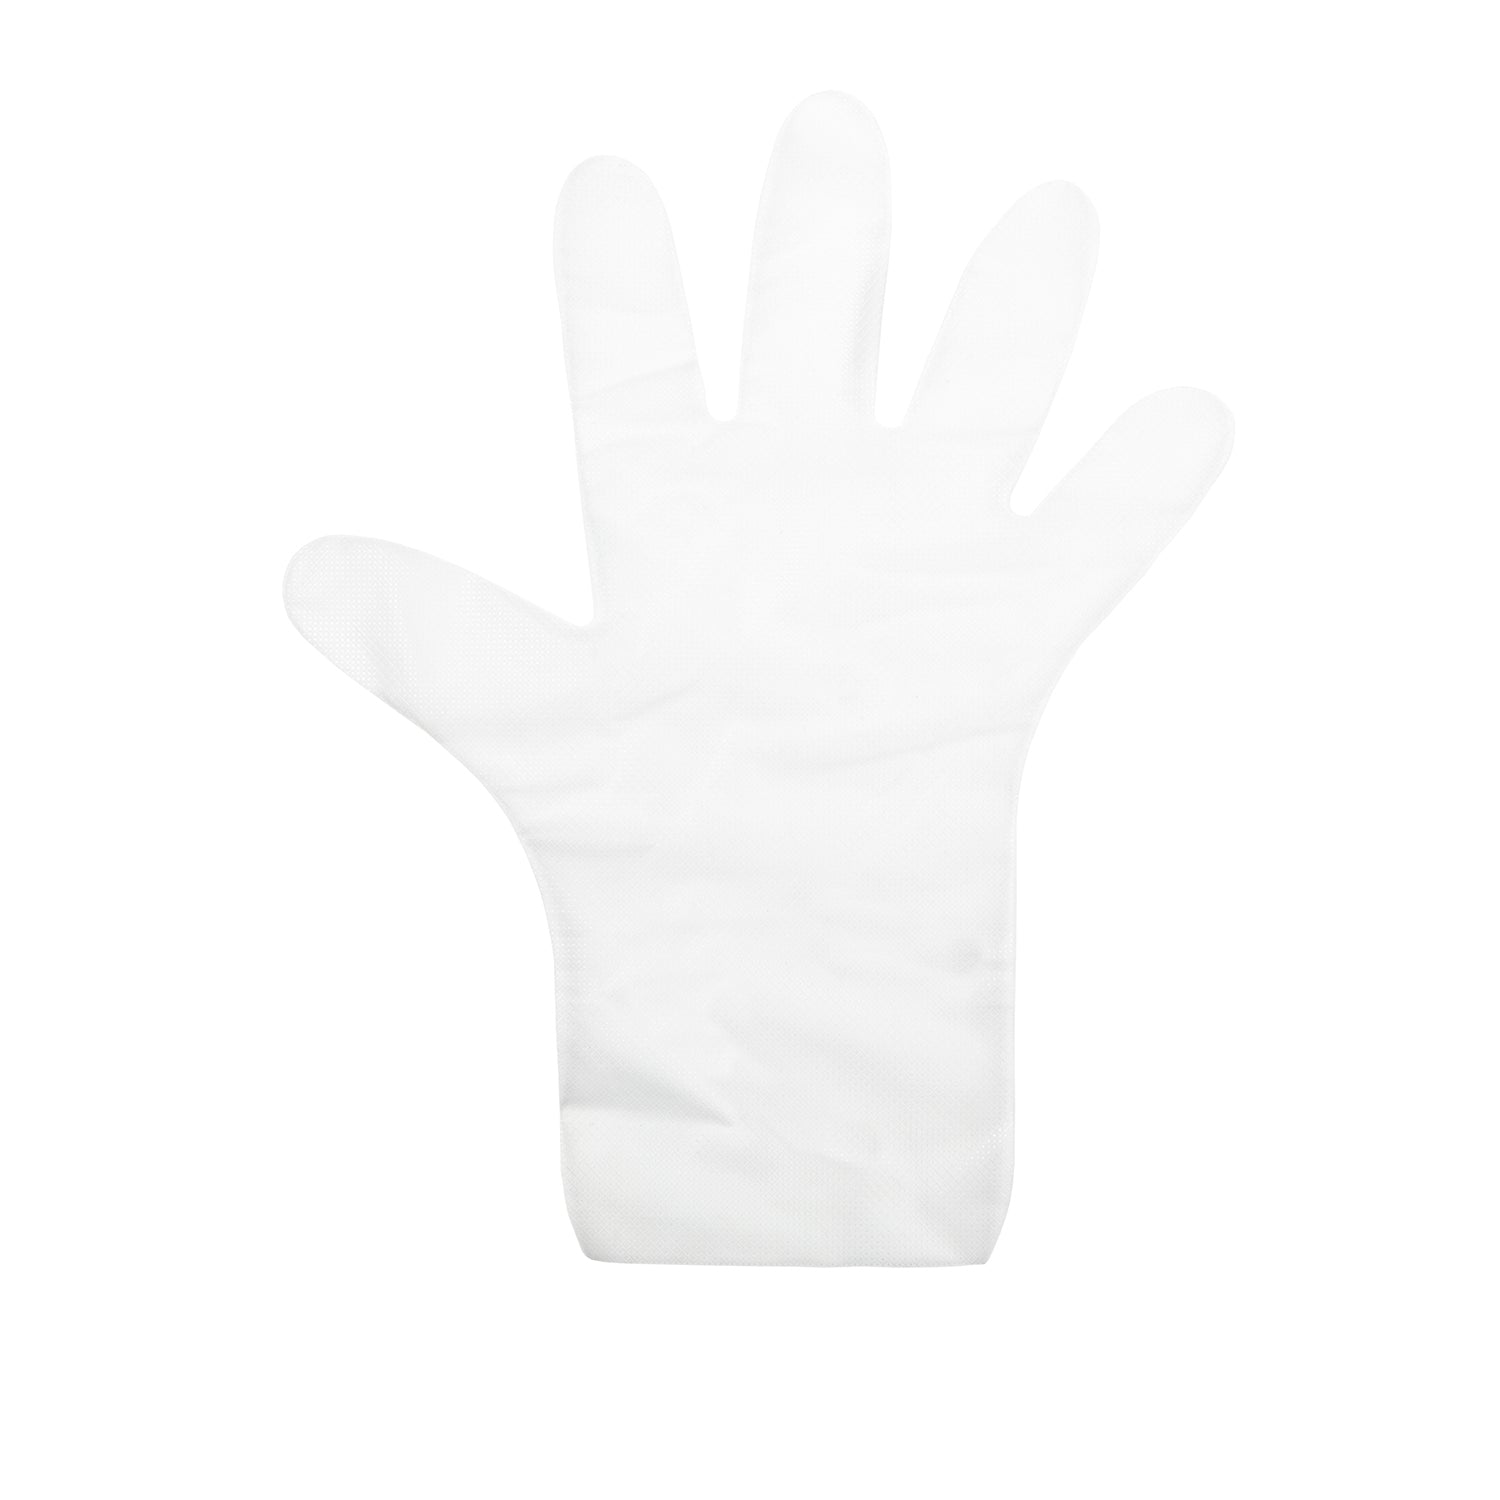 AWEAR Eco Friendly Powder Free Hybrid 2.0 Gloves, Case of 1, XXL: